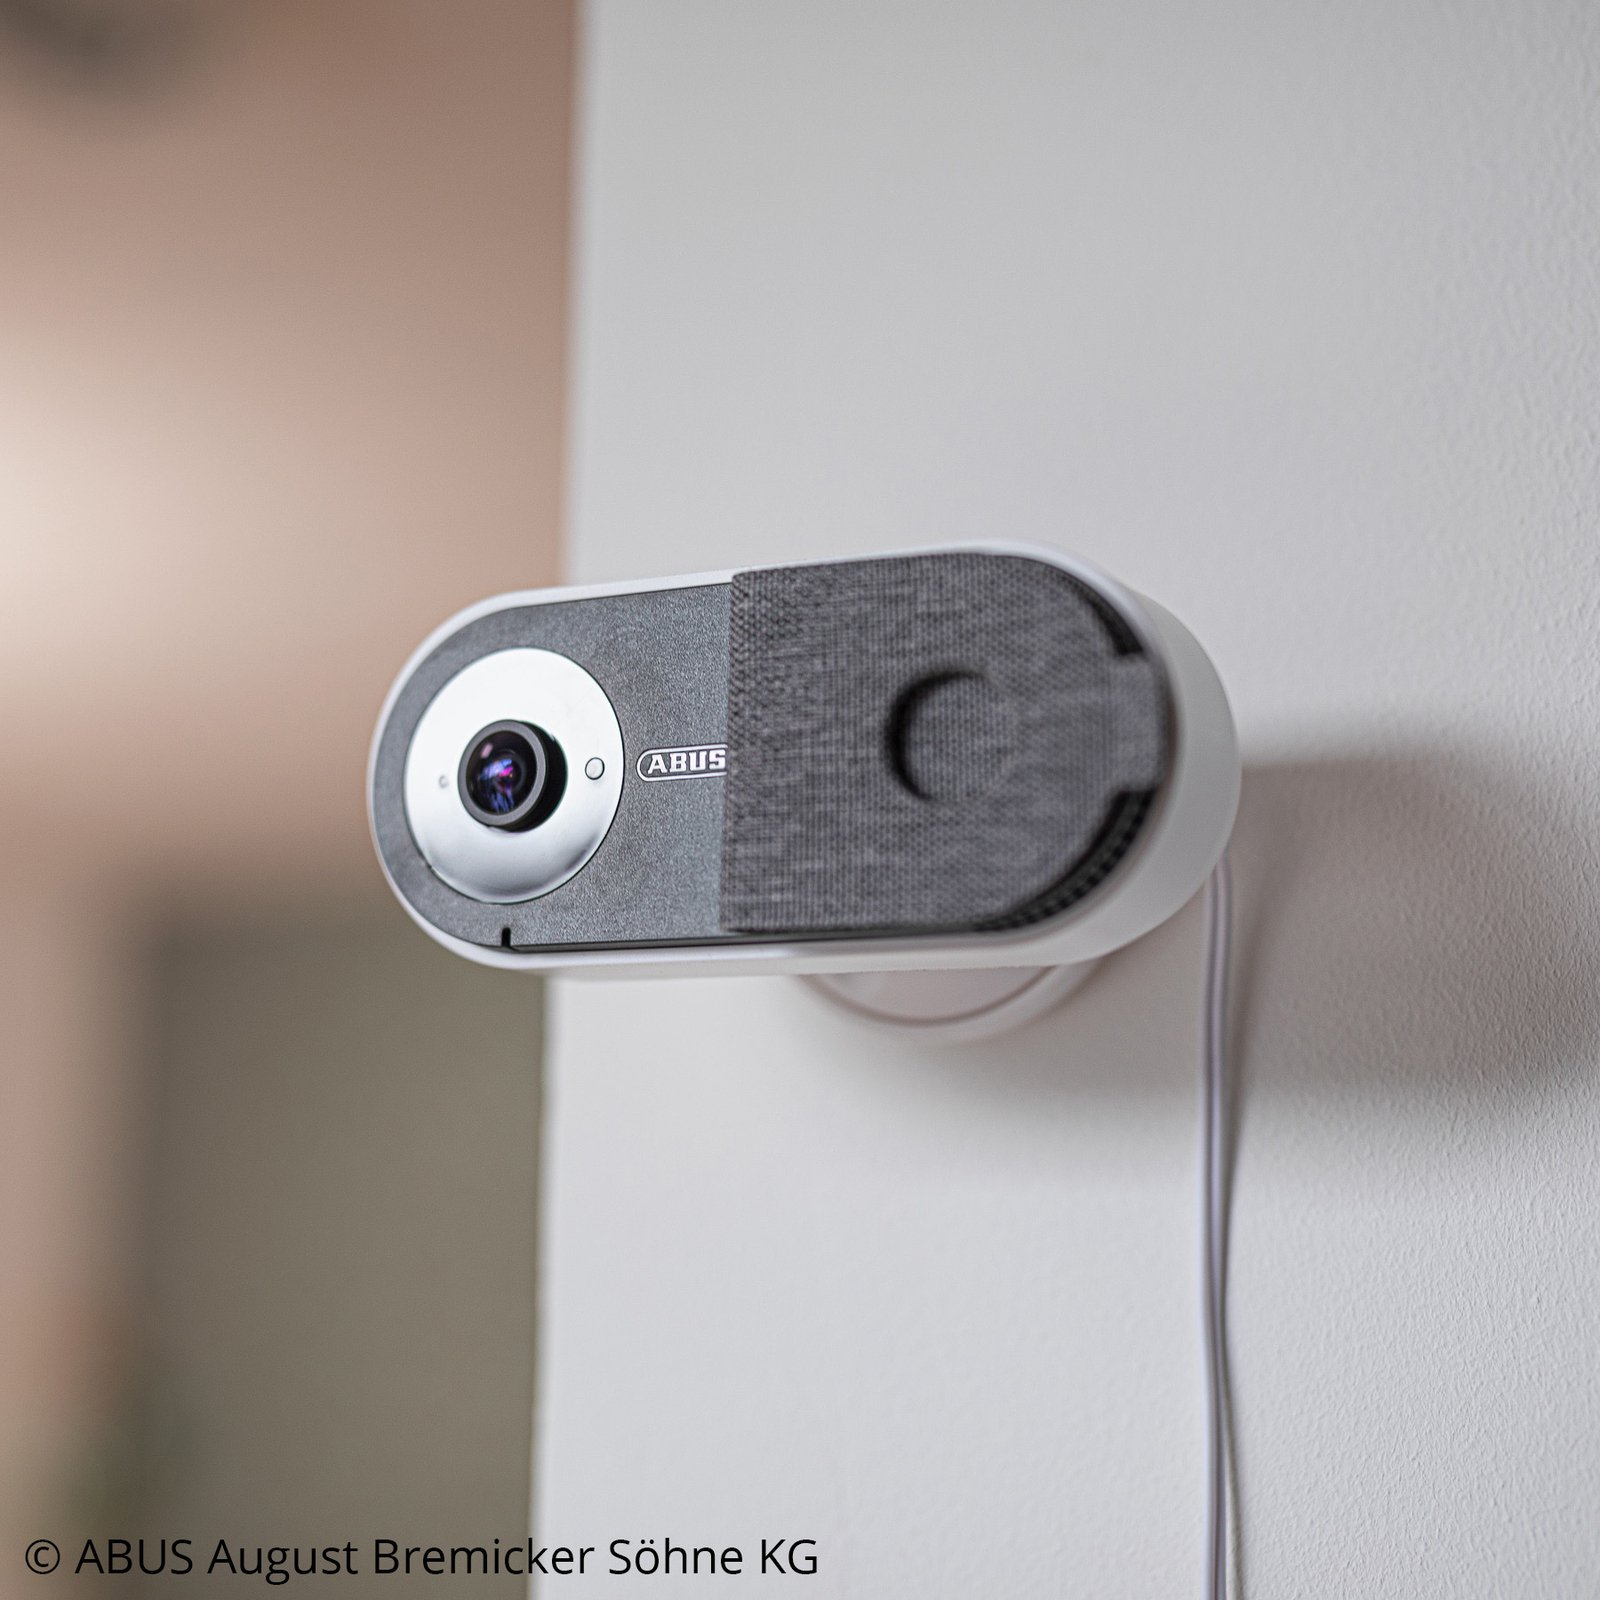 ABUS Privacy kamera WLAN, full HD, 2-drogowe audio